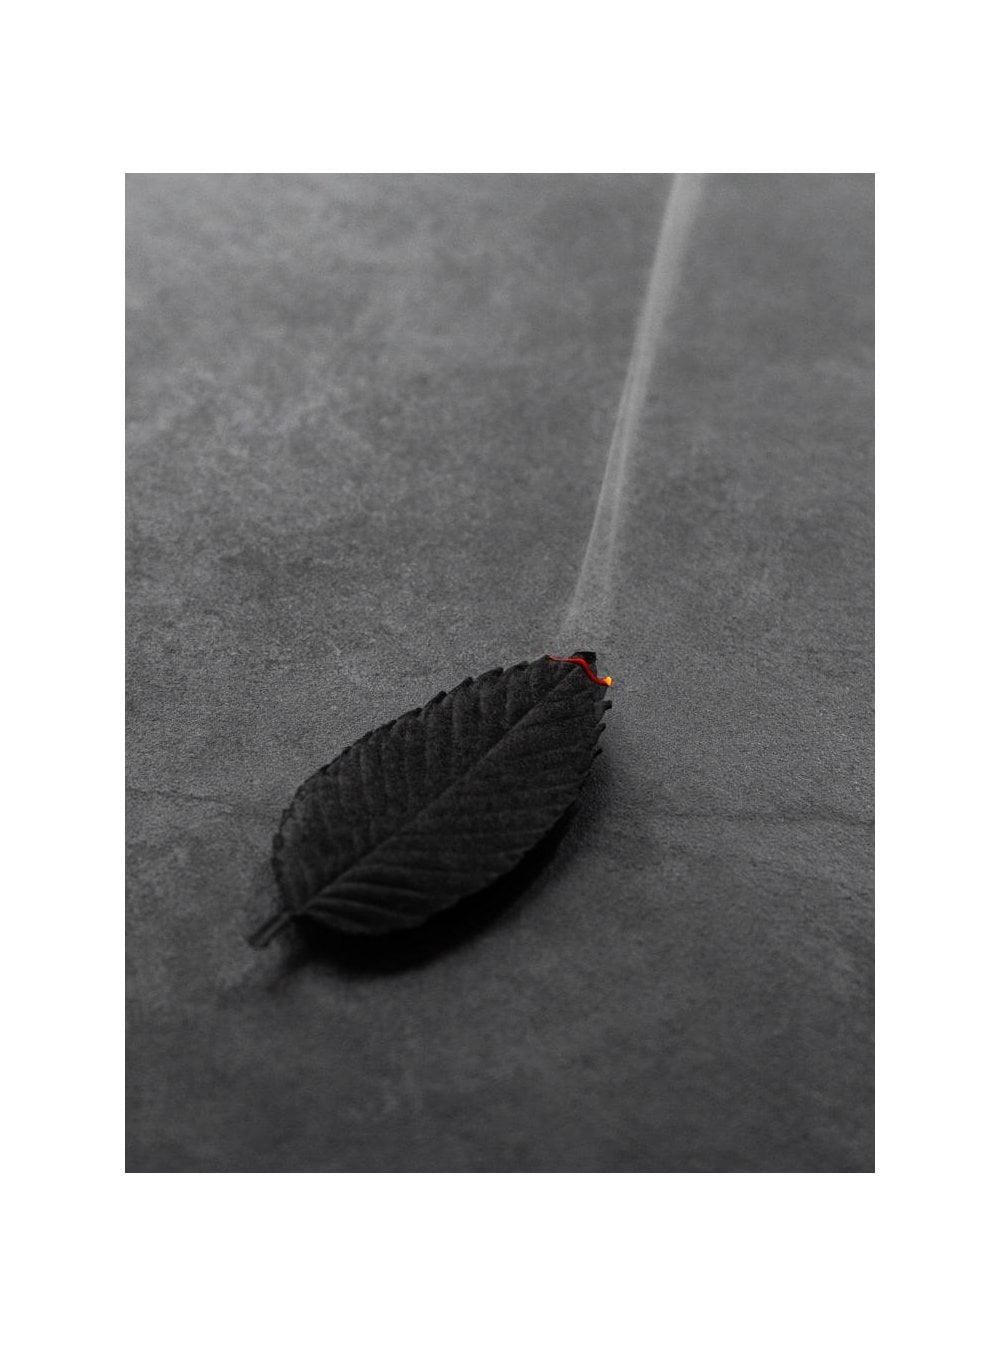 HA KO Paper Incense - Black For Sleep Focus - Set of 6